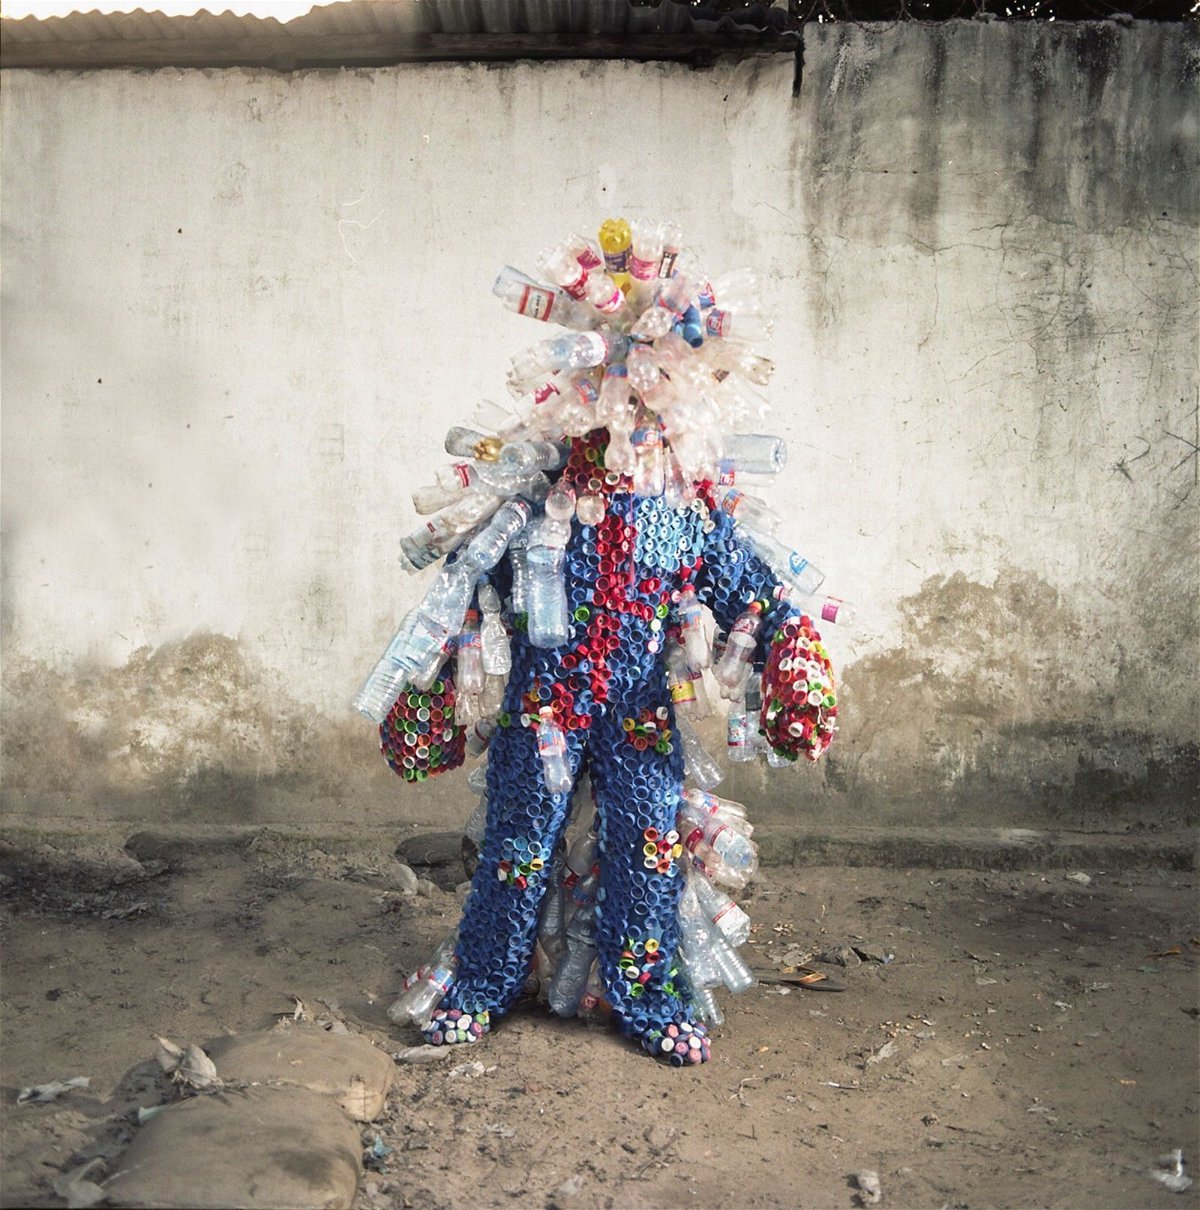 <i>Colin Delfosse</i><br/>Artist Junior Mungongu wears a costume made out of plastic bottles and lids.